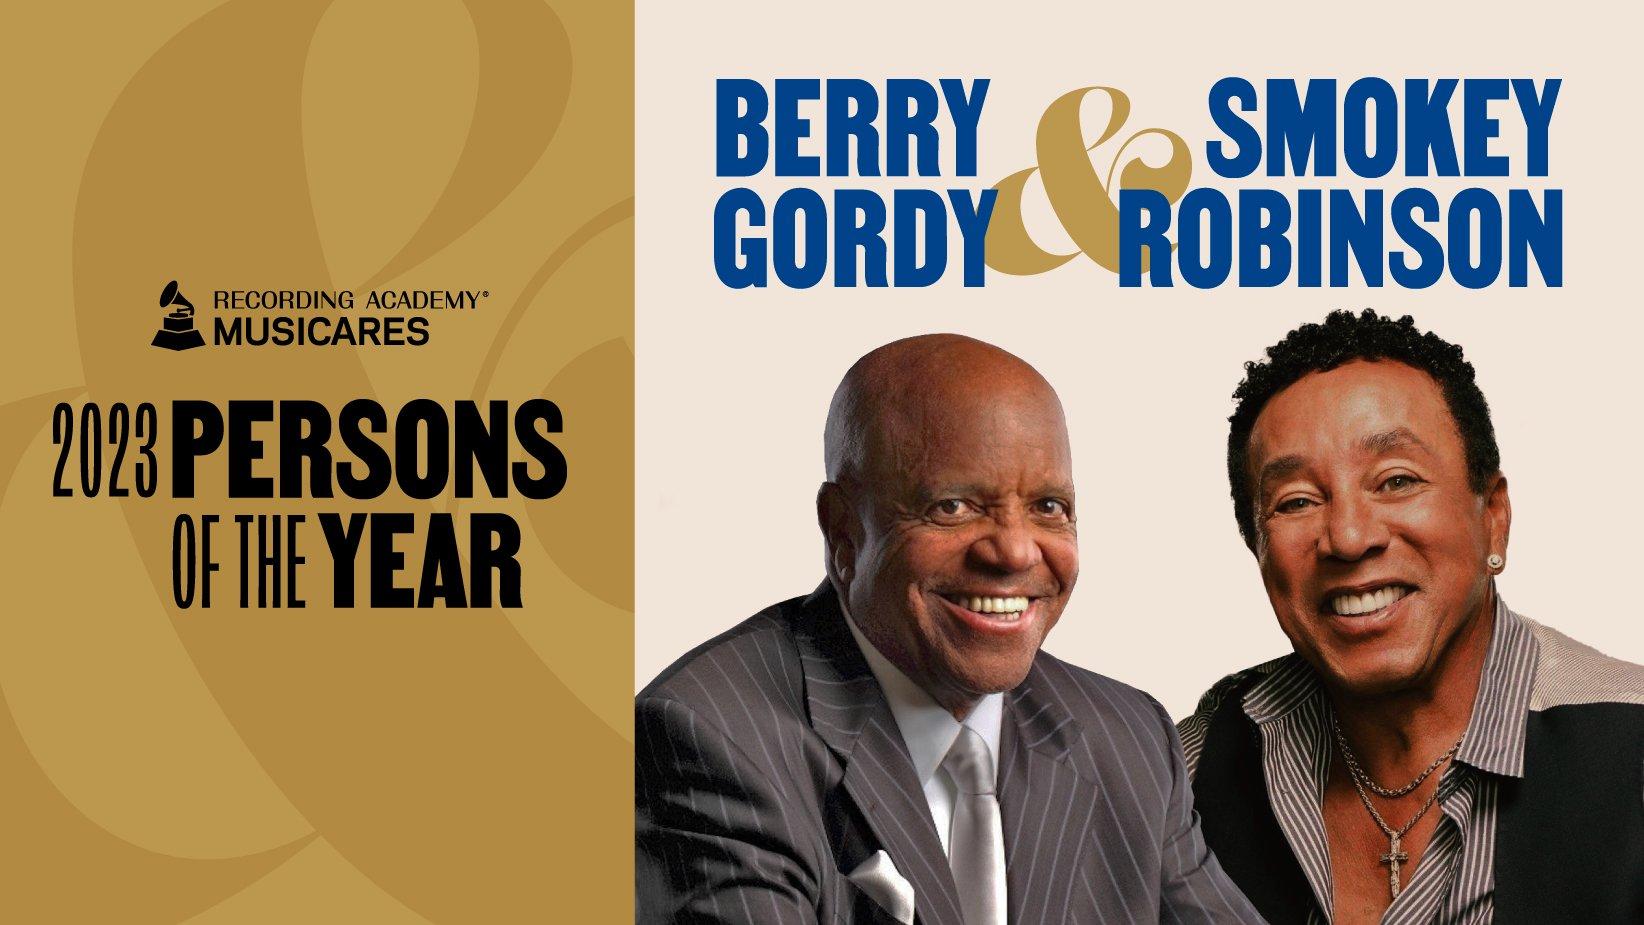 Berry Gordy Smokey Robinson POTY announcement pic NEW